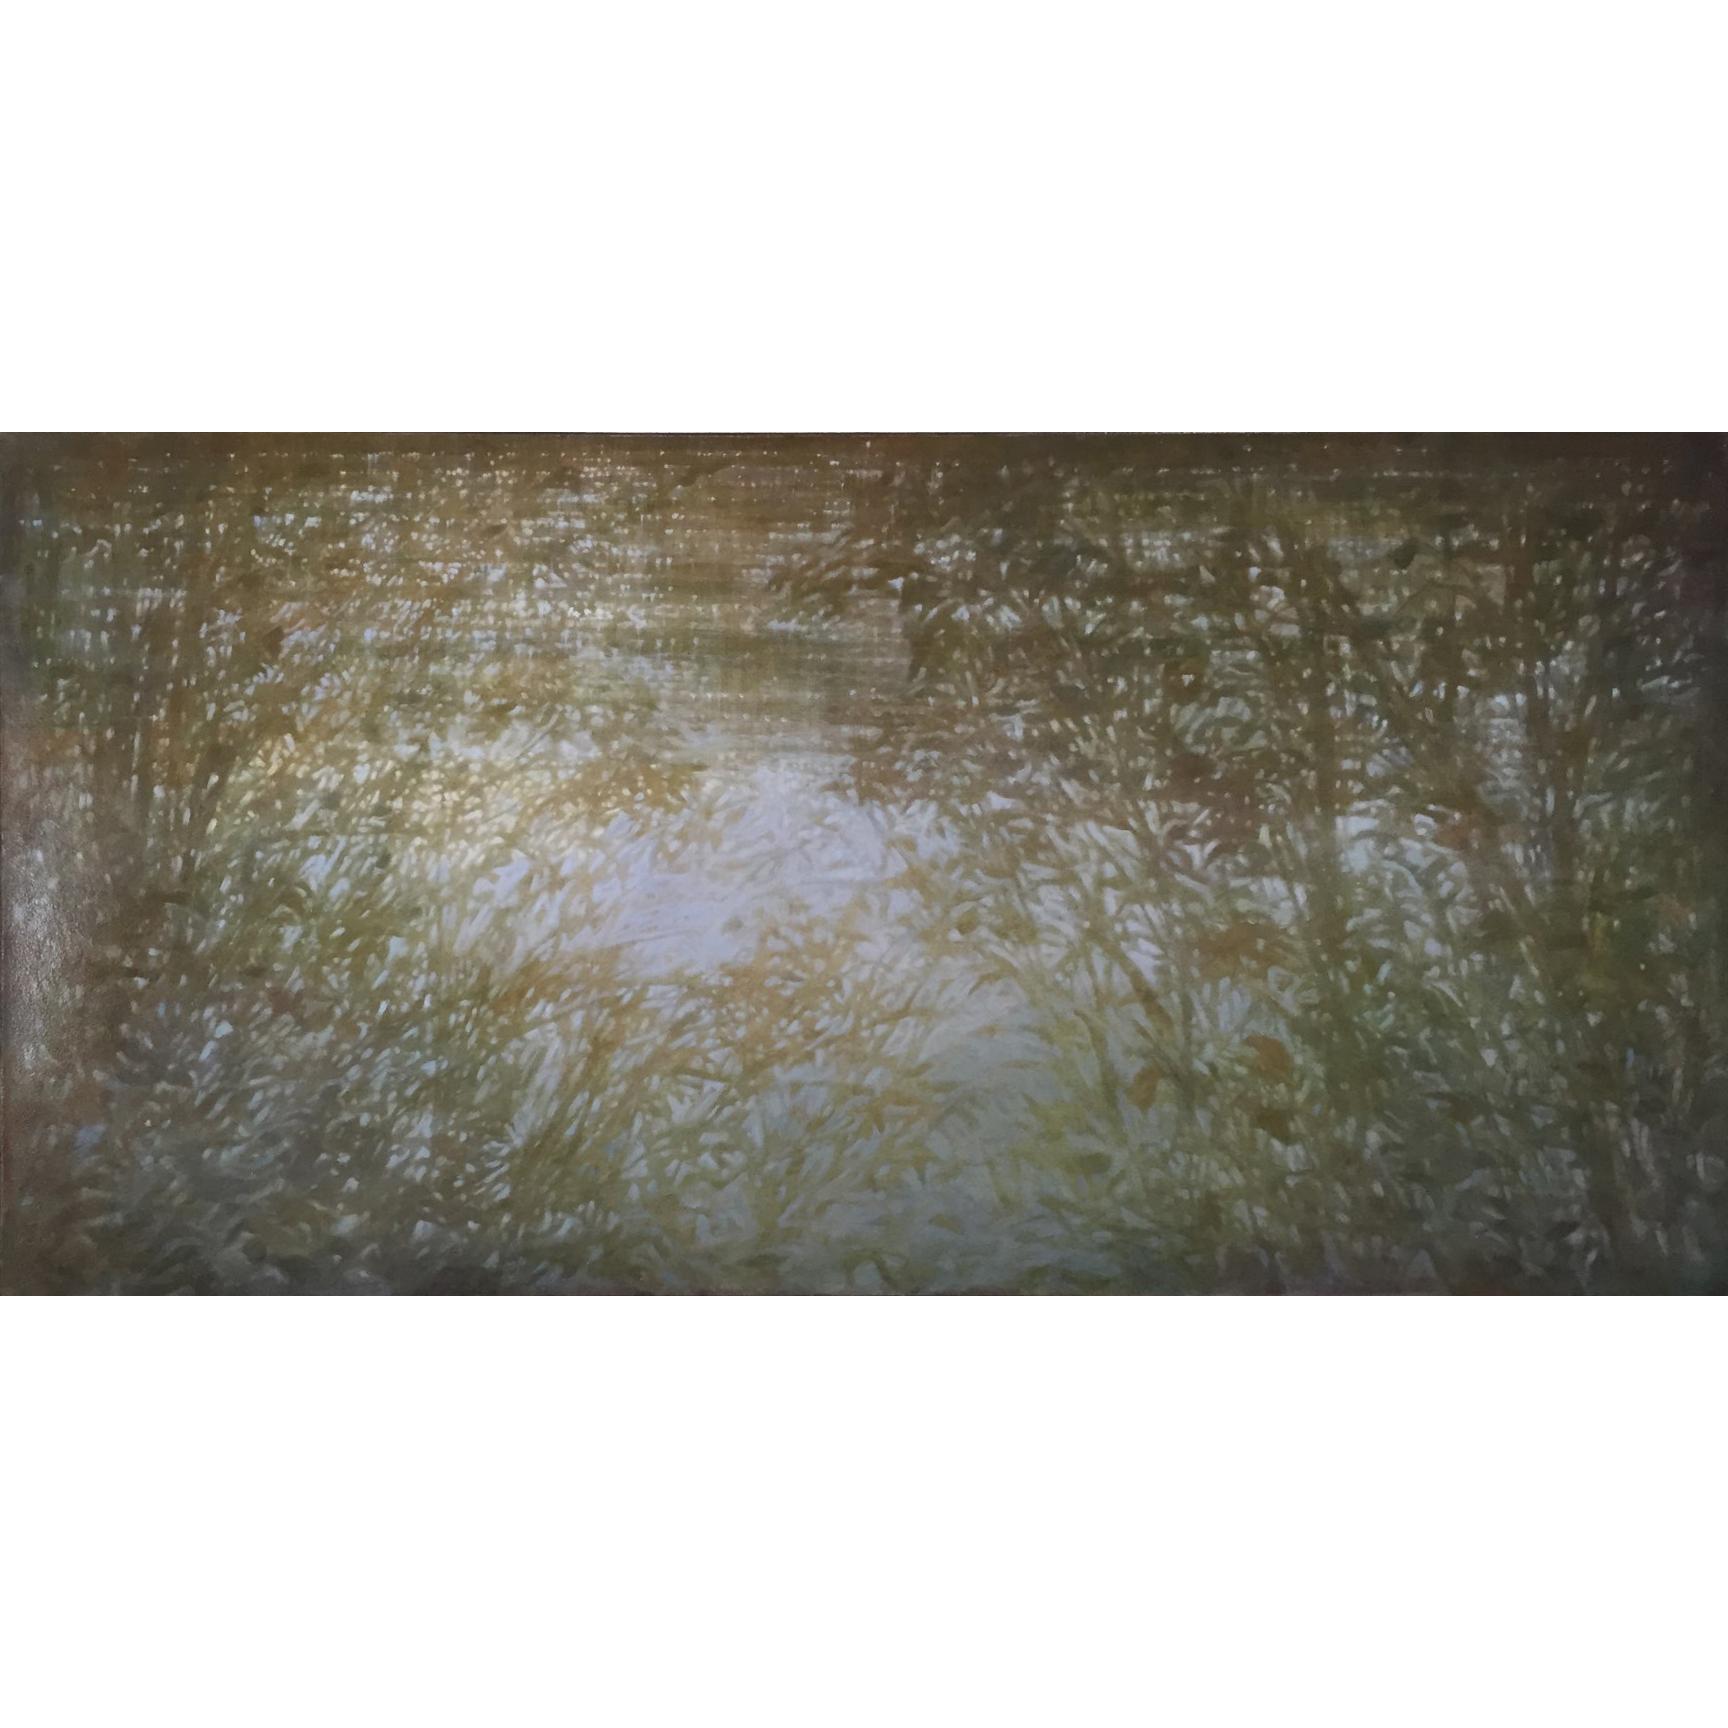 Thomas Monaghan Landscape Painting - Findings/Openings #5